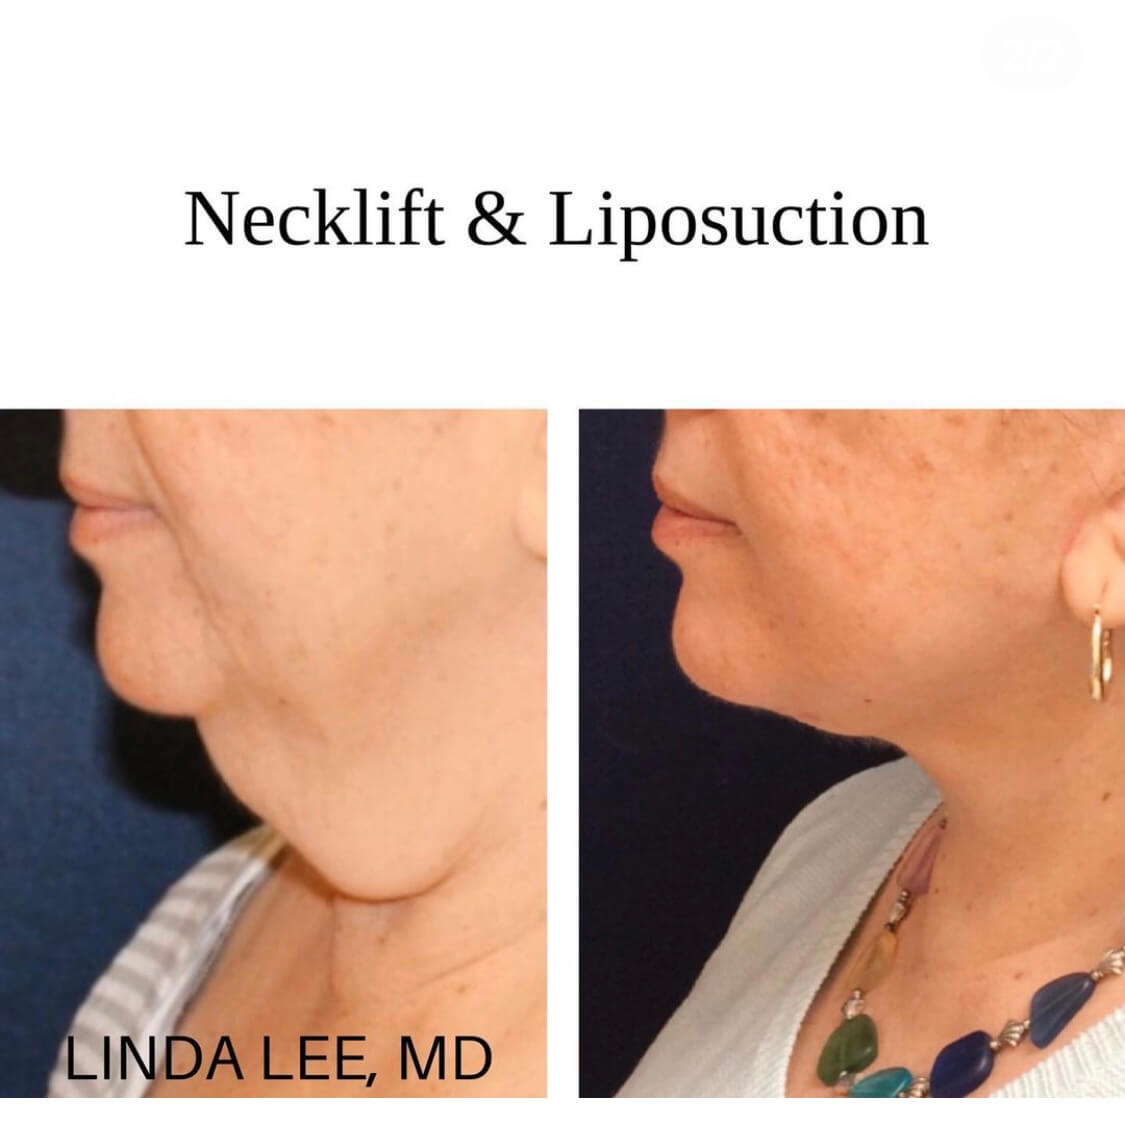 Necklift _ Liposuction 2b side